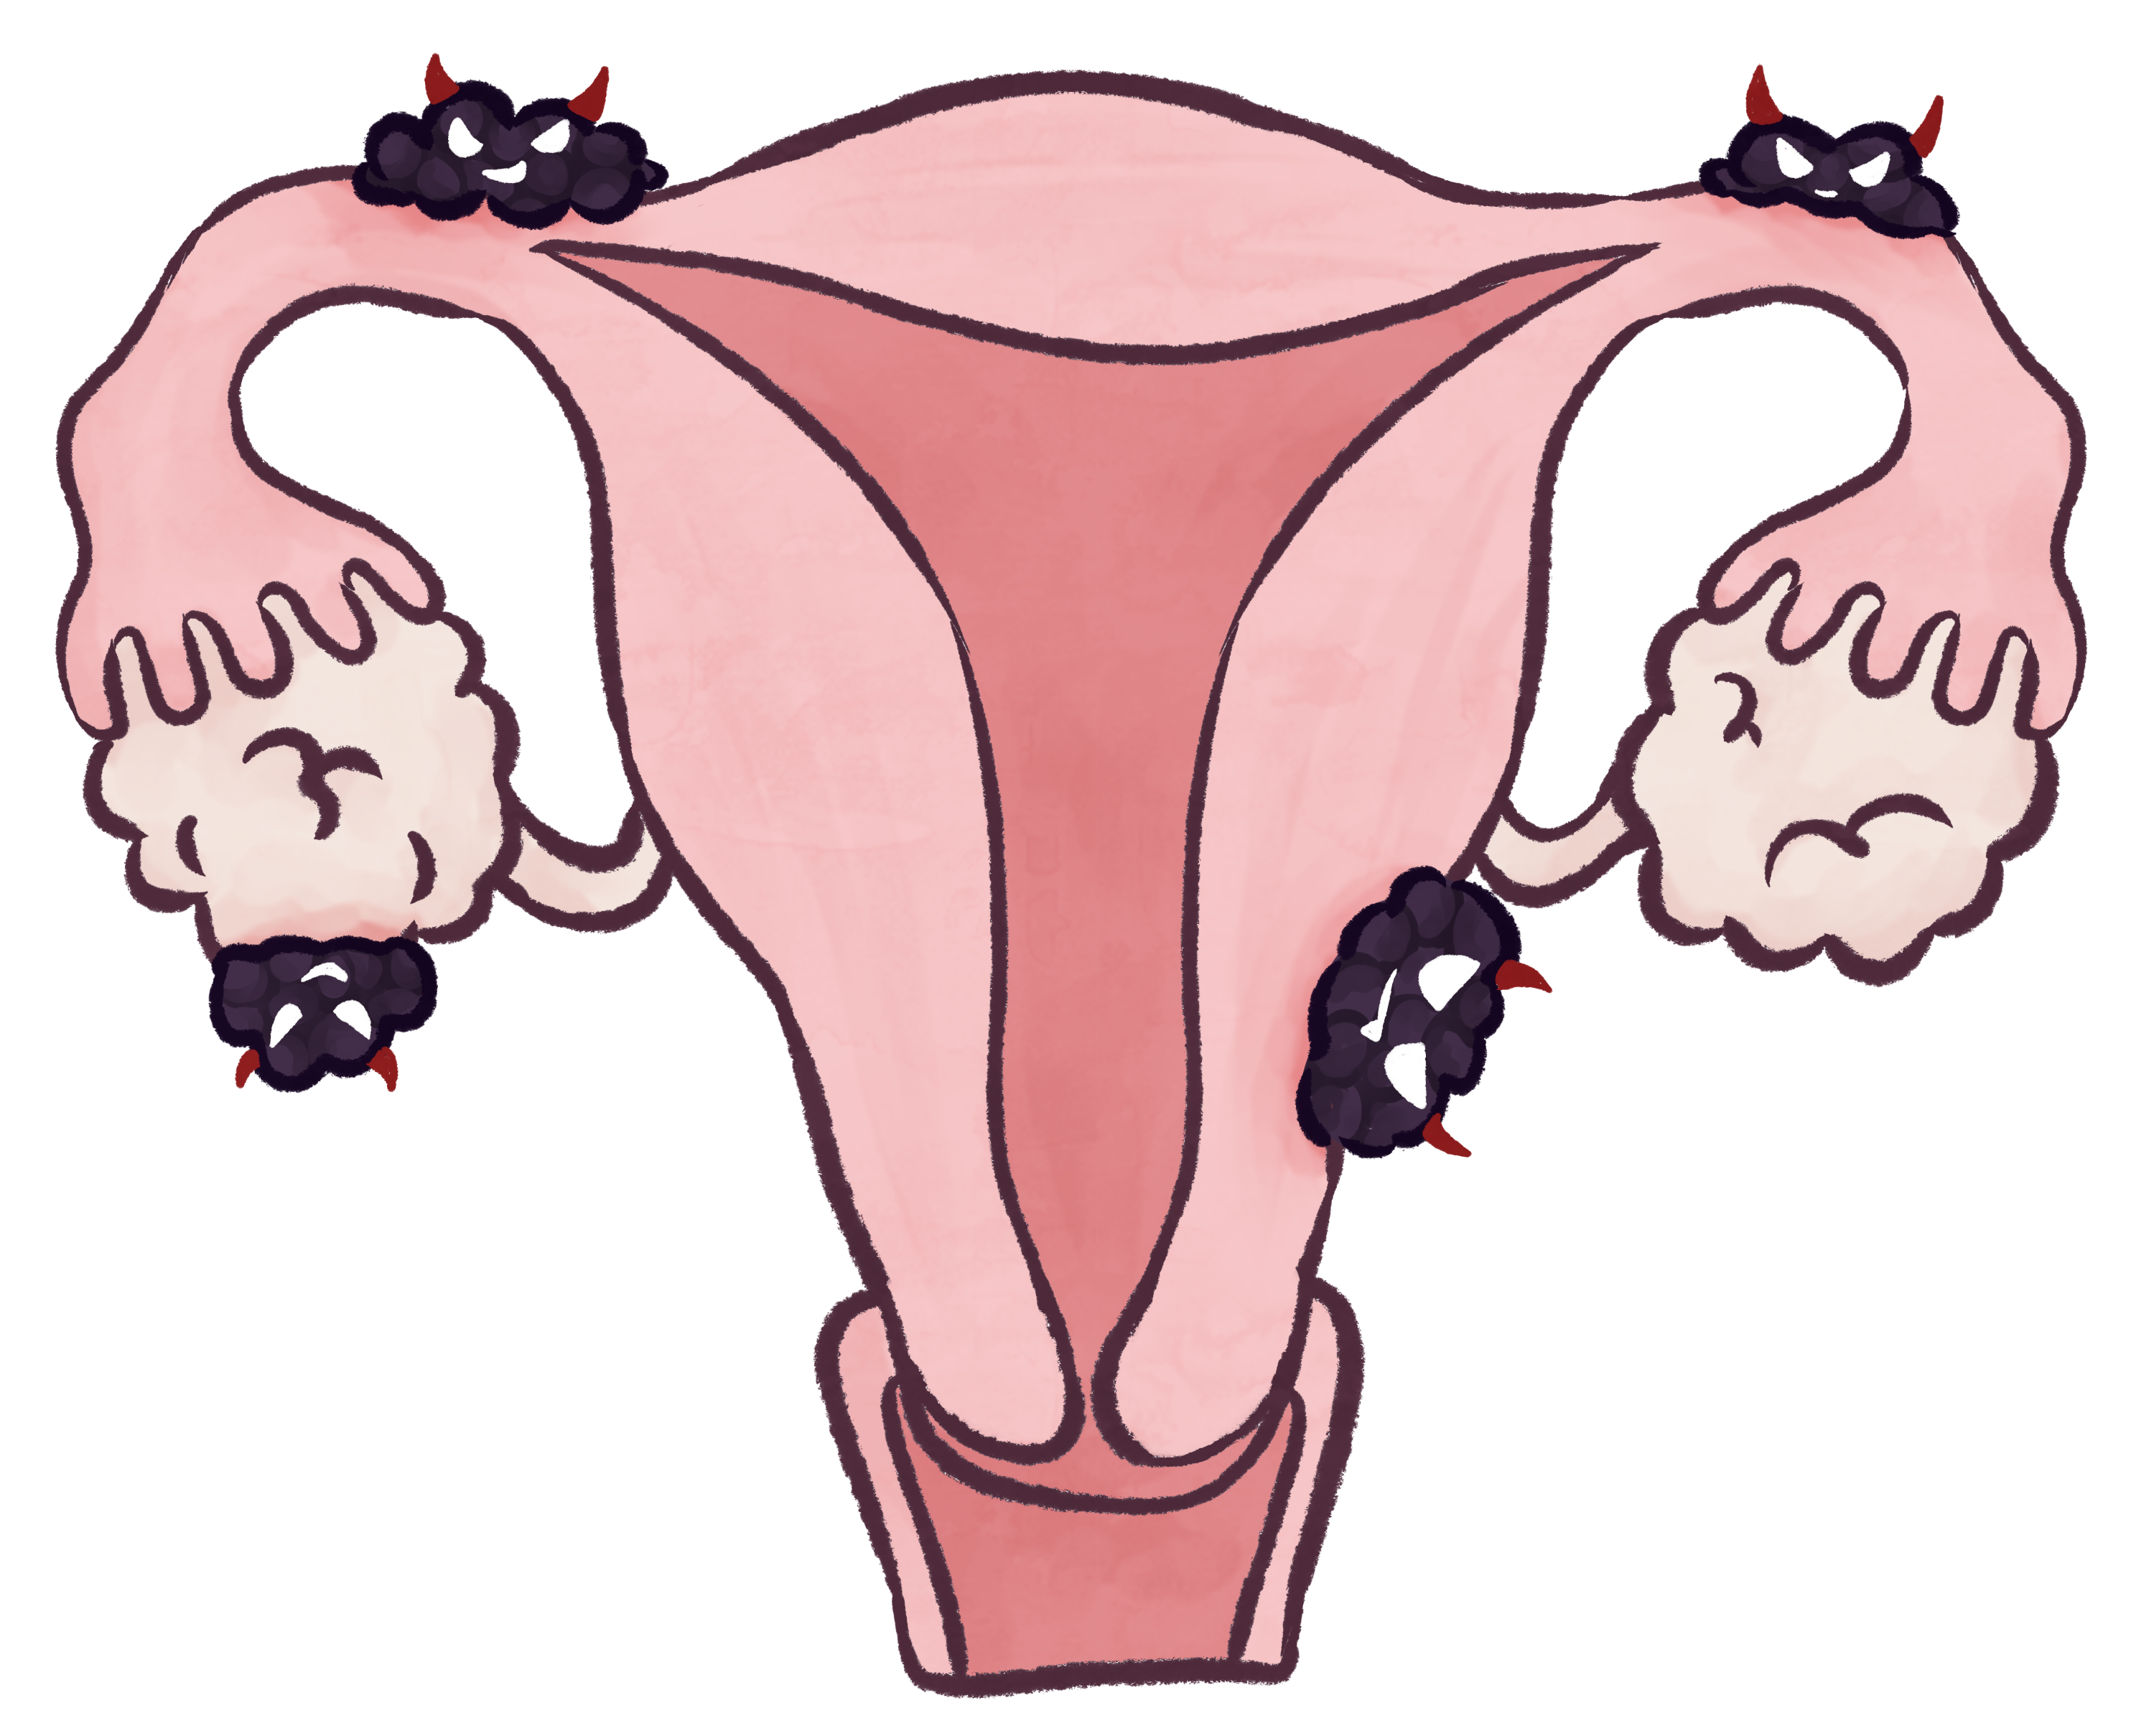 Uterus lined with anthropomorphized endometriosis. The endometriosis has devil horns.